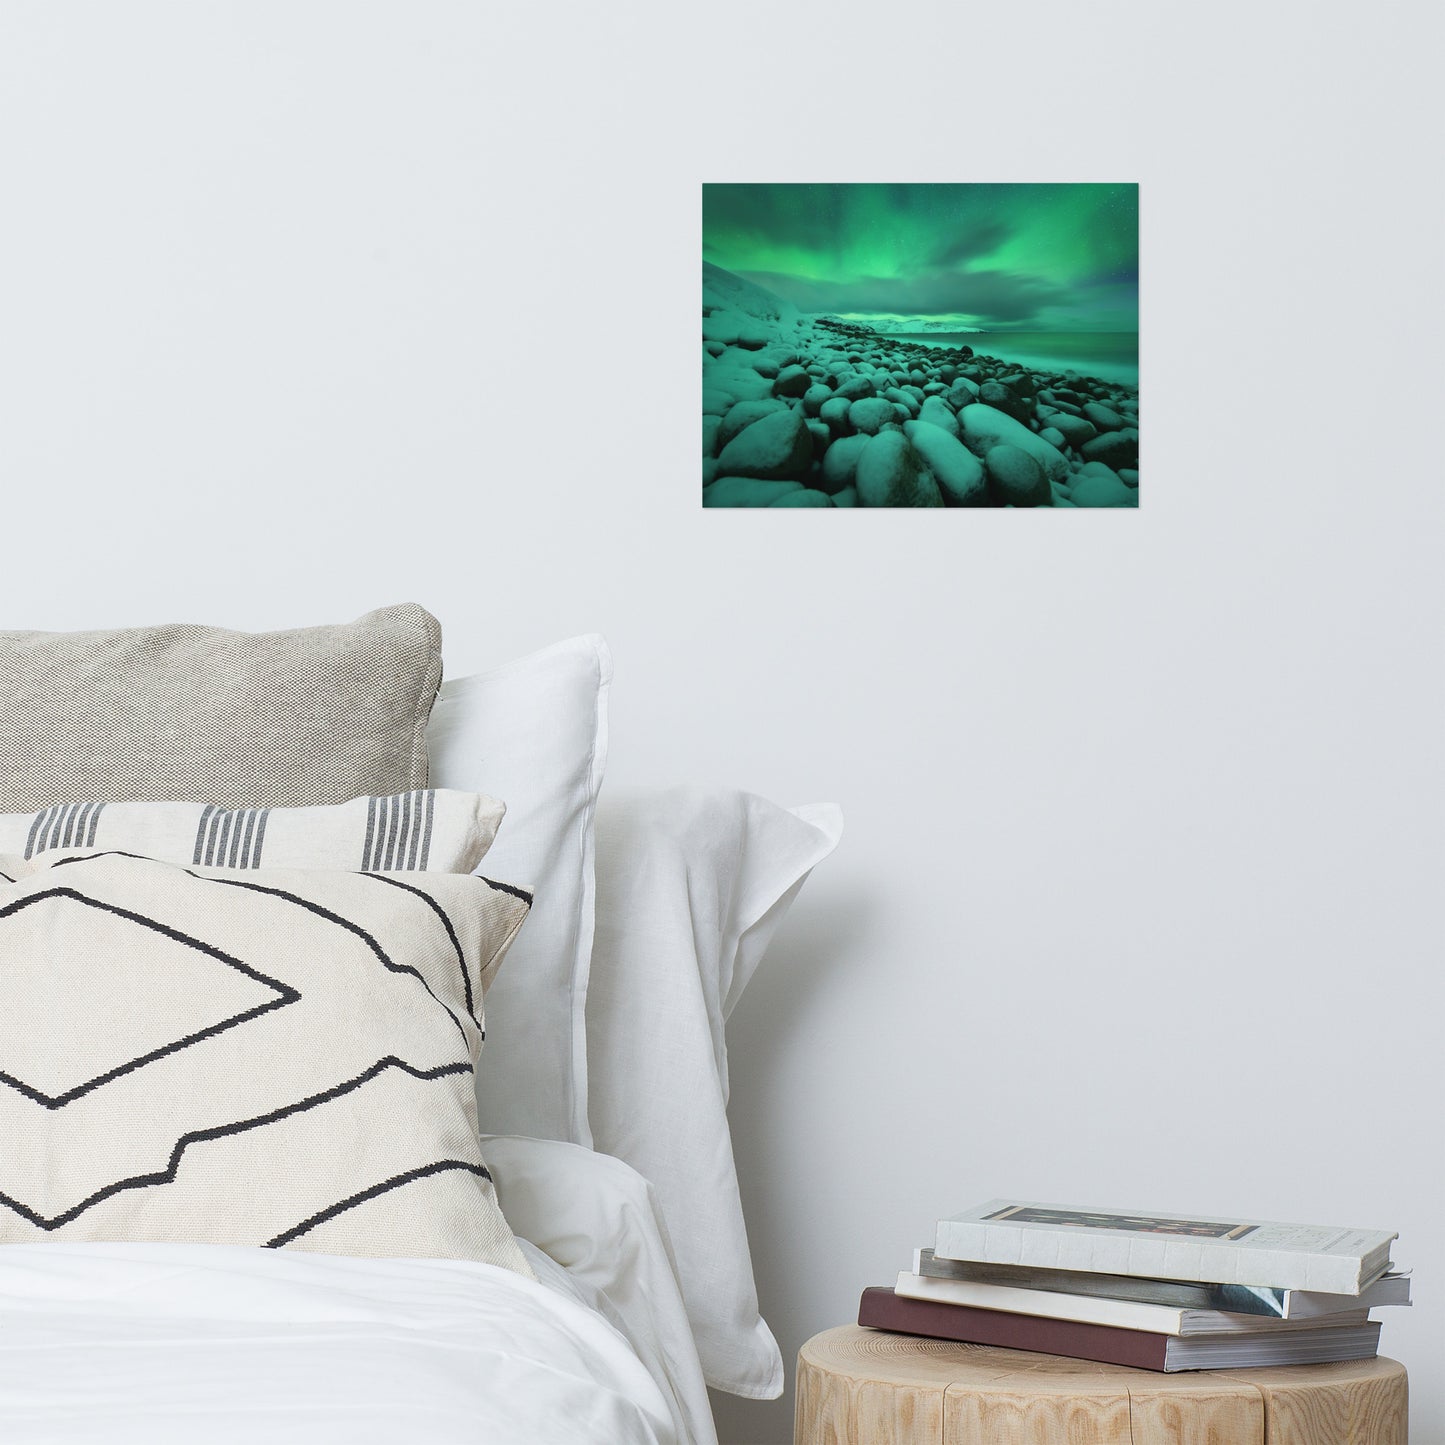 Bedroom Art For Guys: Aurora Borealis Over Ocean in Teriberka Night - Northern Lights - Seascape - Rural / Country Style Landscape / Nature Loose / Unframed / Frameless / Frameable Photograph Wall Art Print - Artwork